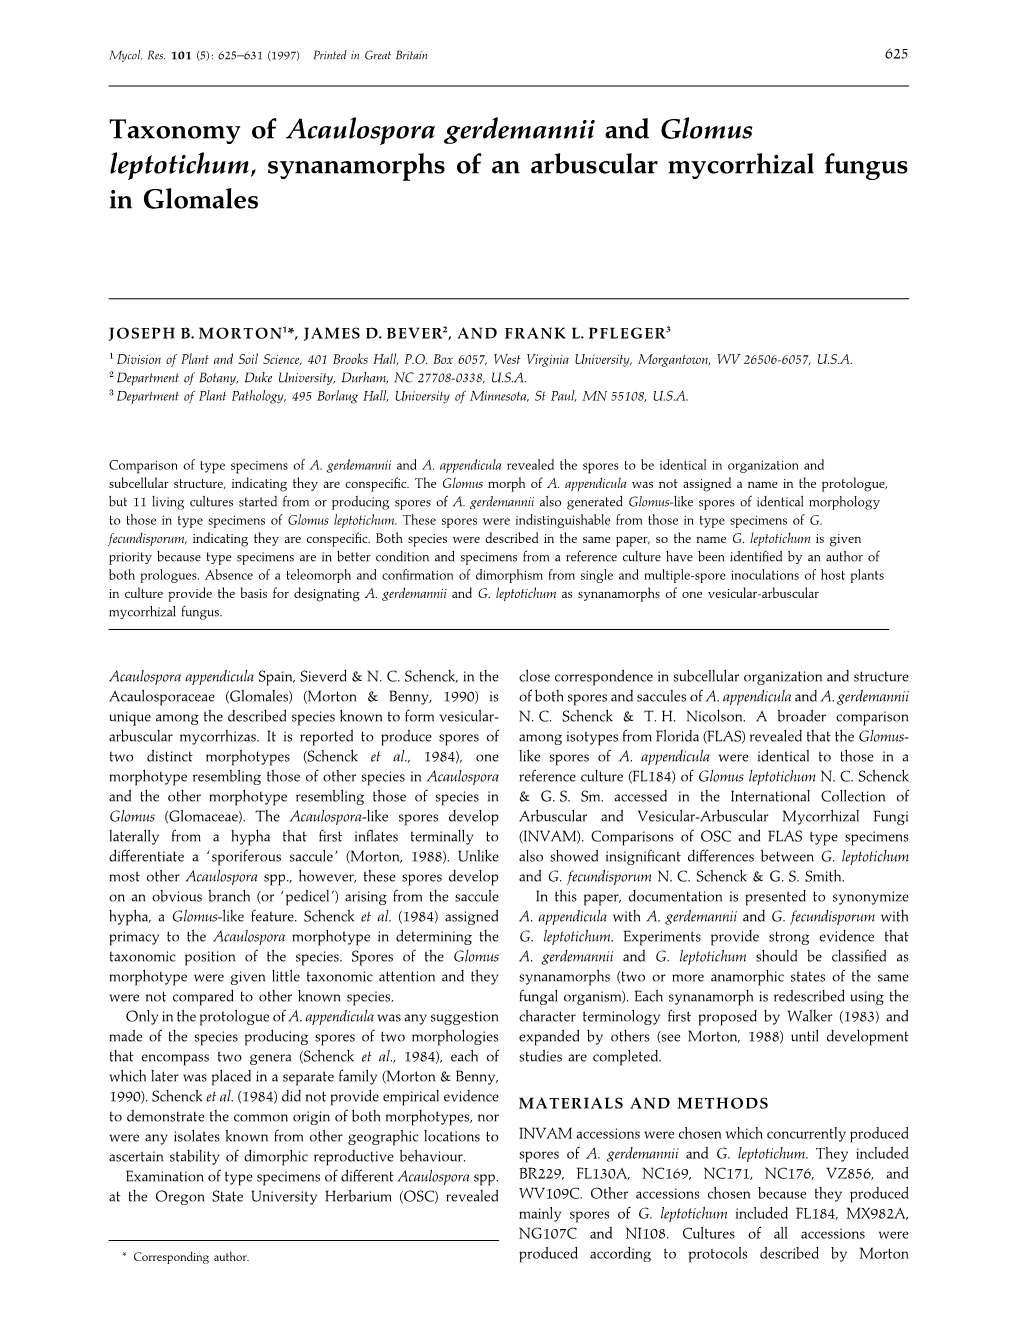 Taxonomy of Acaulospora Gerdemannii and Glomus Leptotichum, Synanamorphs of an Arbuscular Mycorrhizal Fungus in Glomales